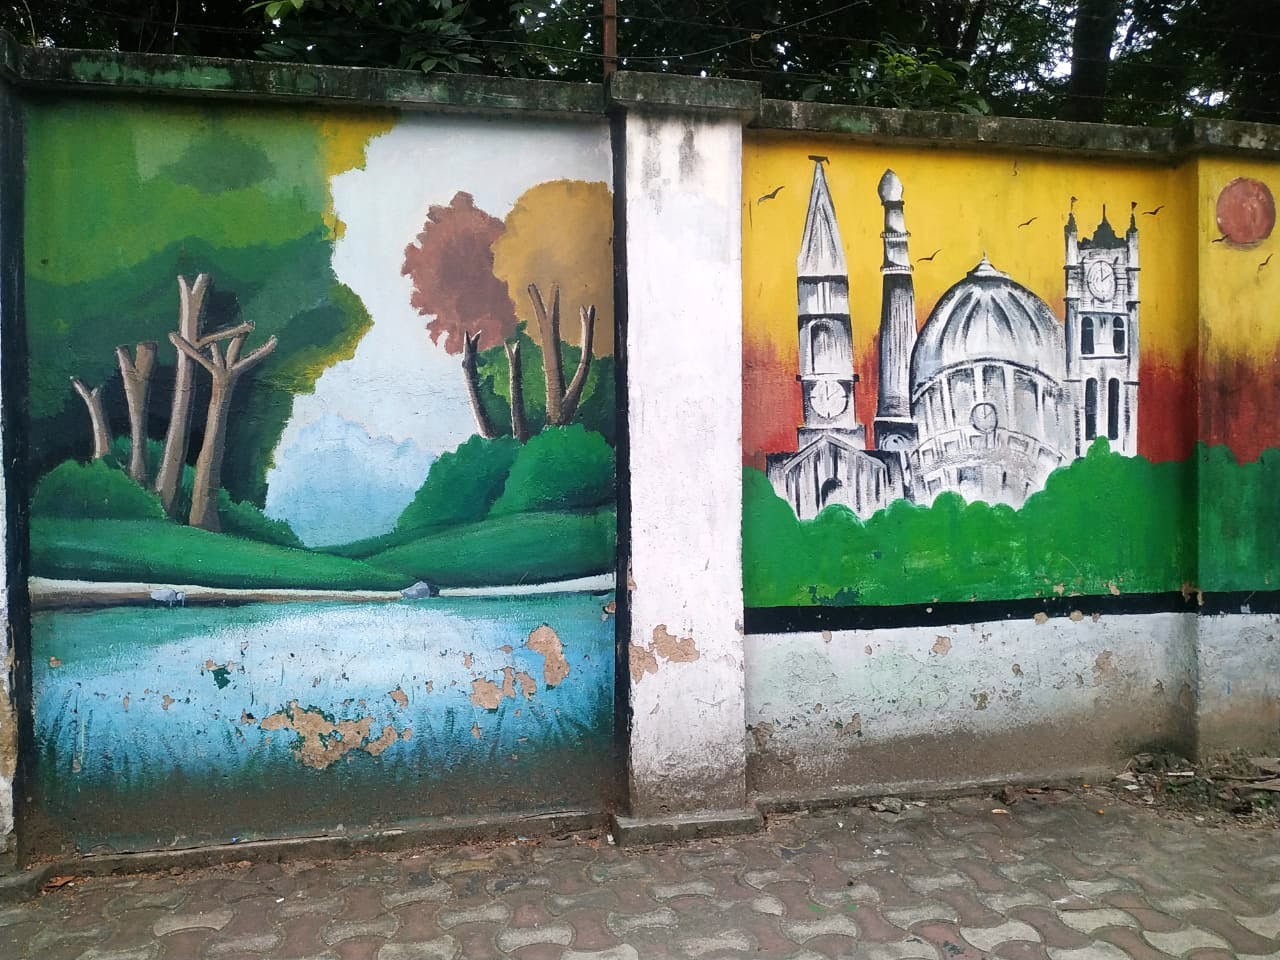 Green,Wall,Street art,Art,Graffiti,Mural,Tree,Painting,Architecture,Visual arts